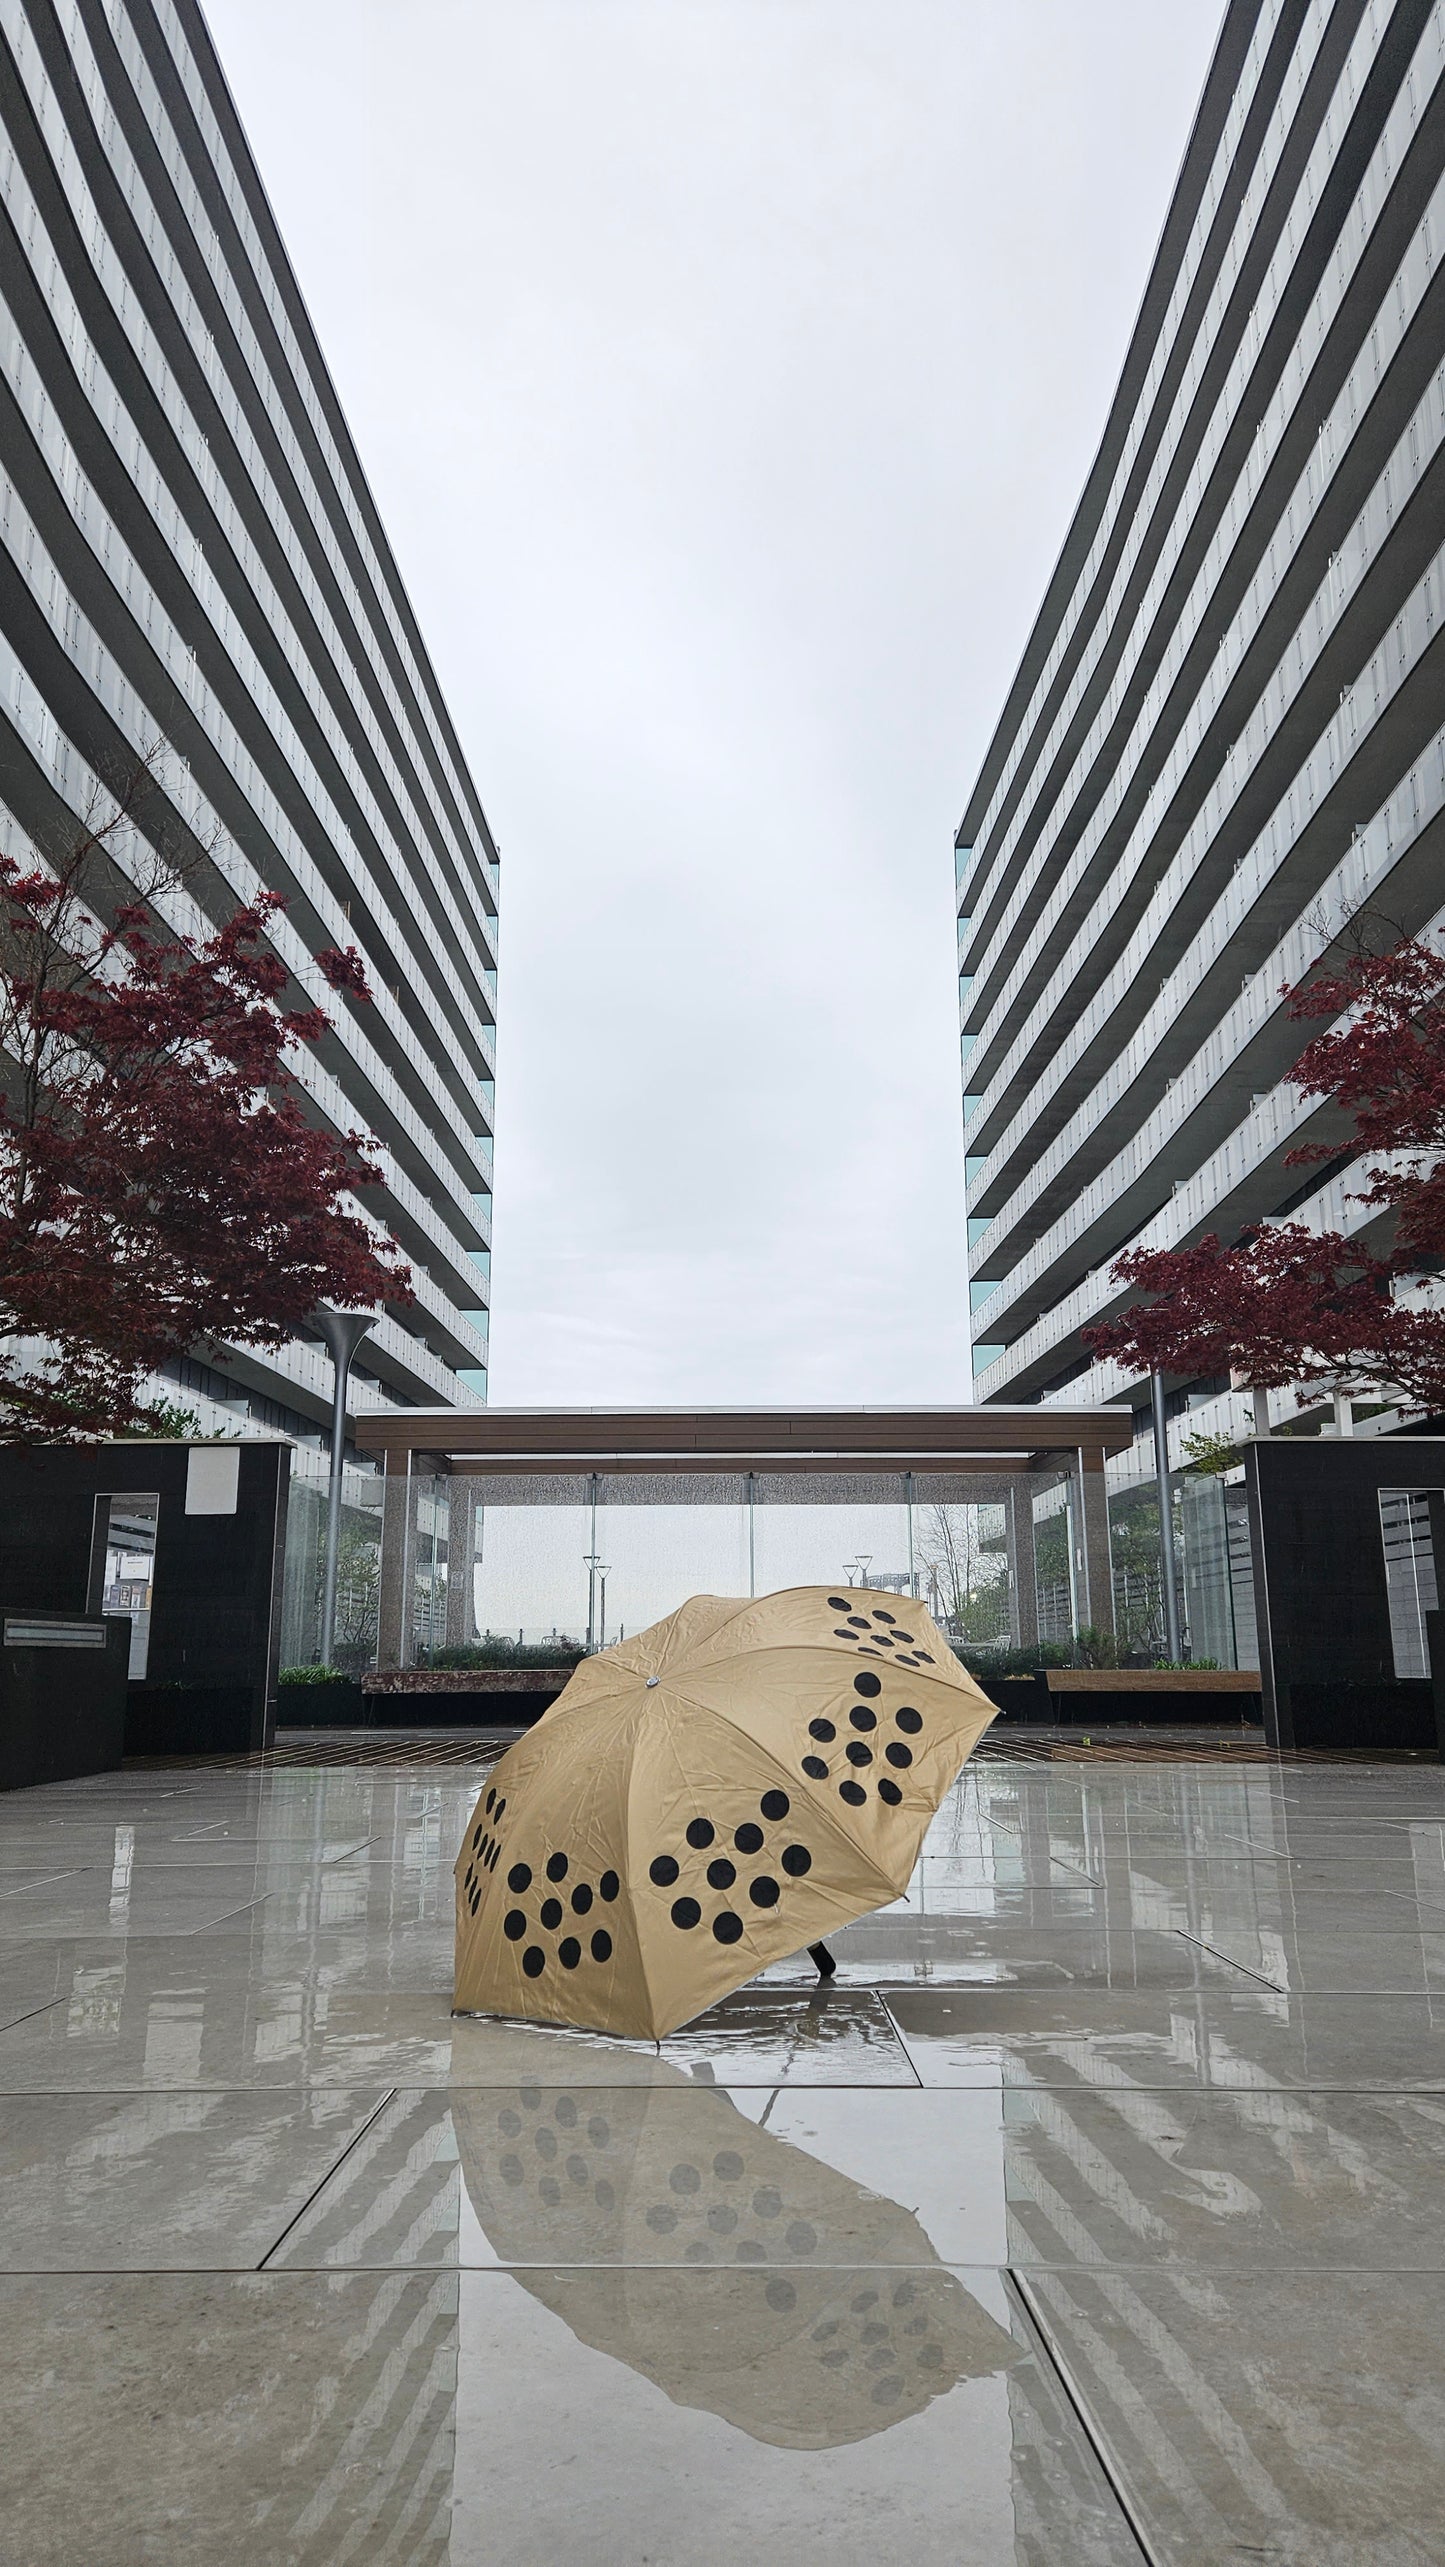 MaybeDaily Cute Bubble Tea-Themed Umbrella for Rainy Days